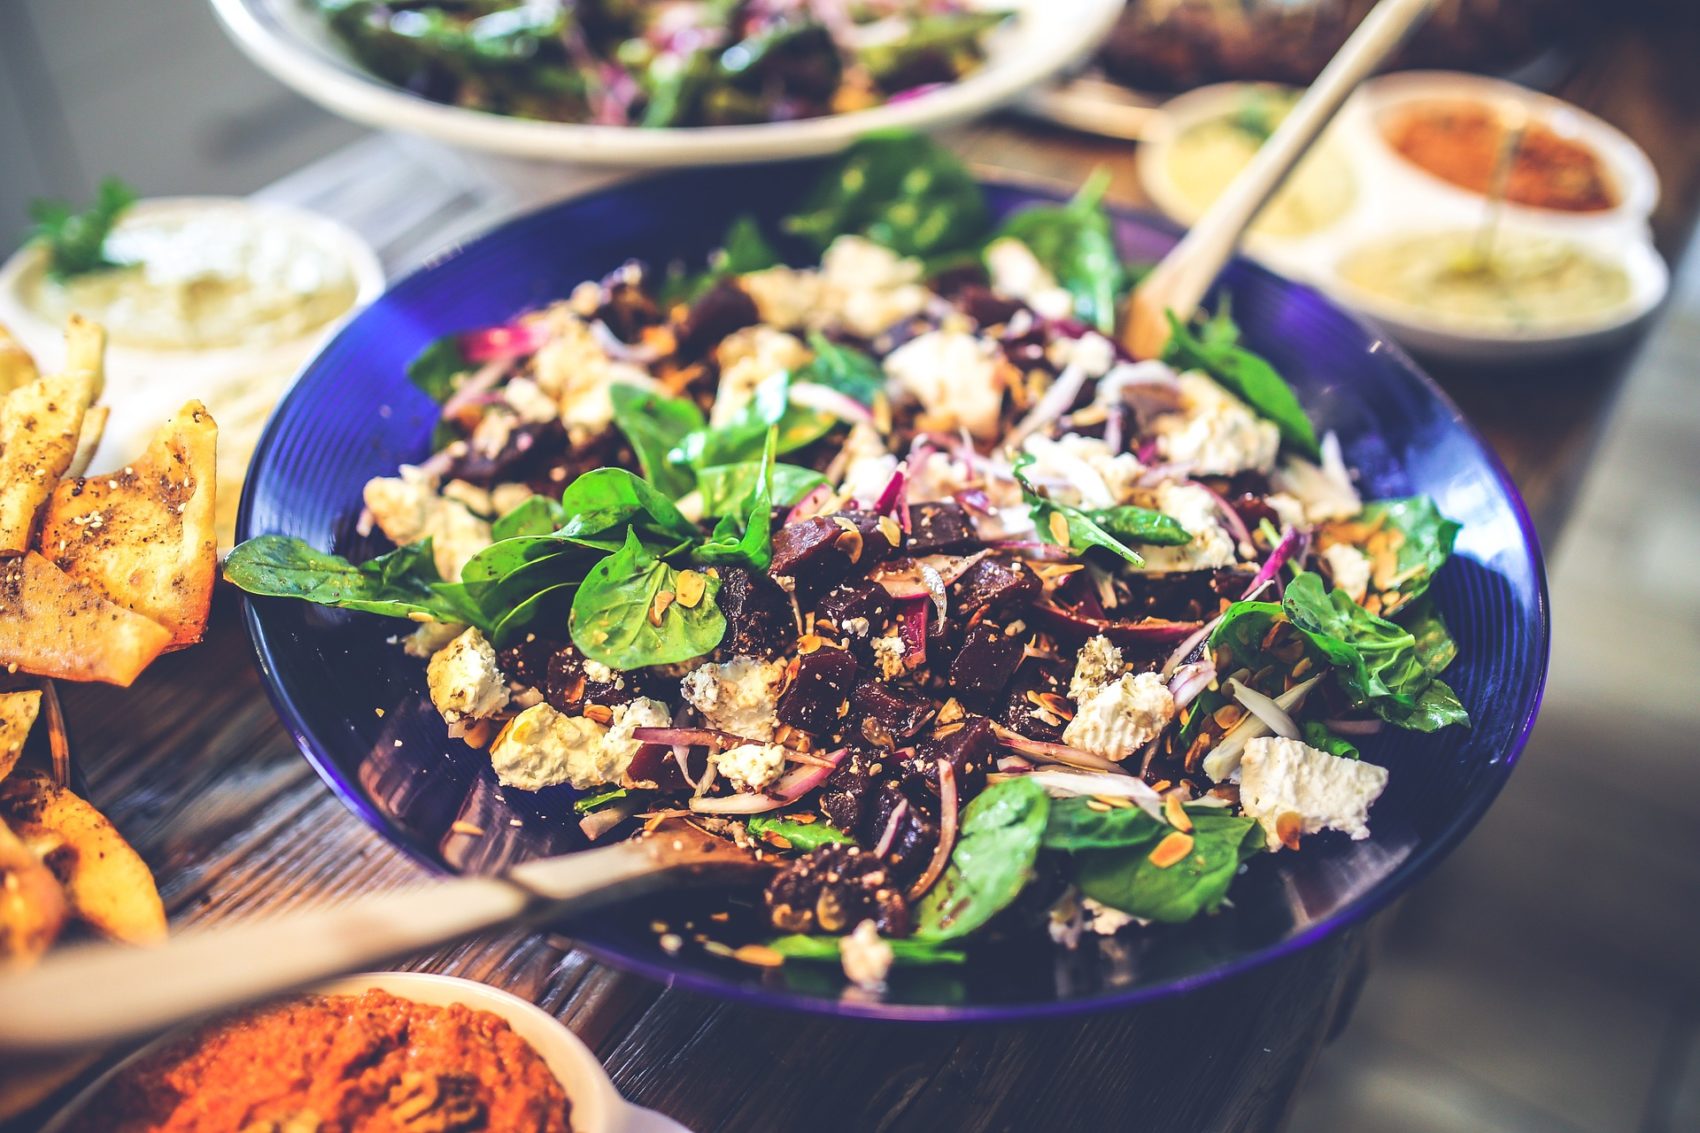 Italian Spinach and Mushroom Salad